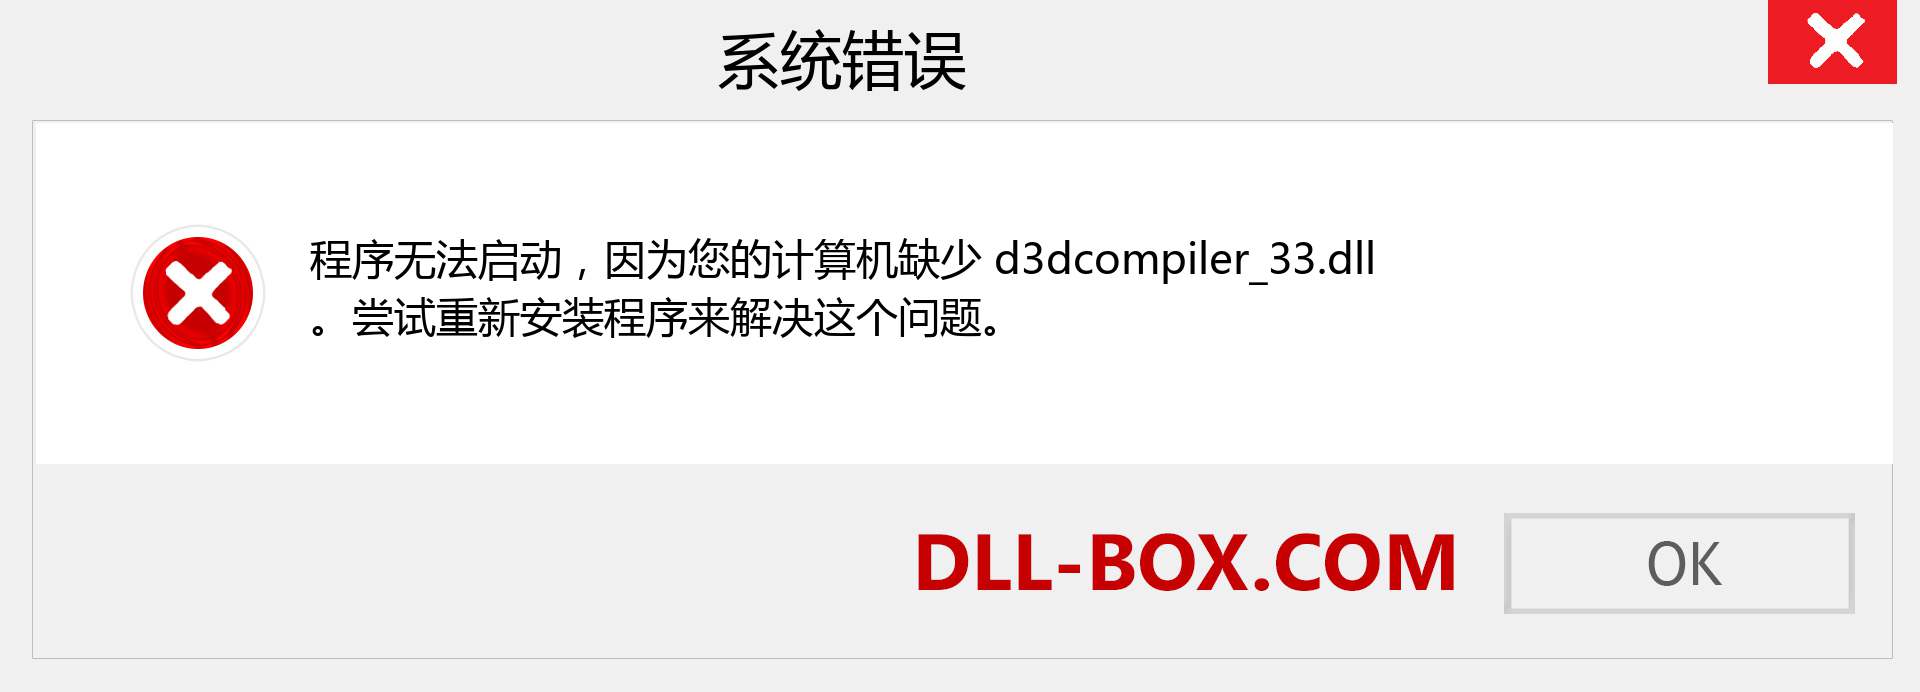 d3dcompiler_33.dll 文件丢失？。 适用于 Windows 7、8、10 的下载 - 修复 Windows、照片、图像上的 d3dcompiler_33 dll 丢失错误